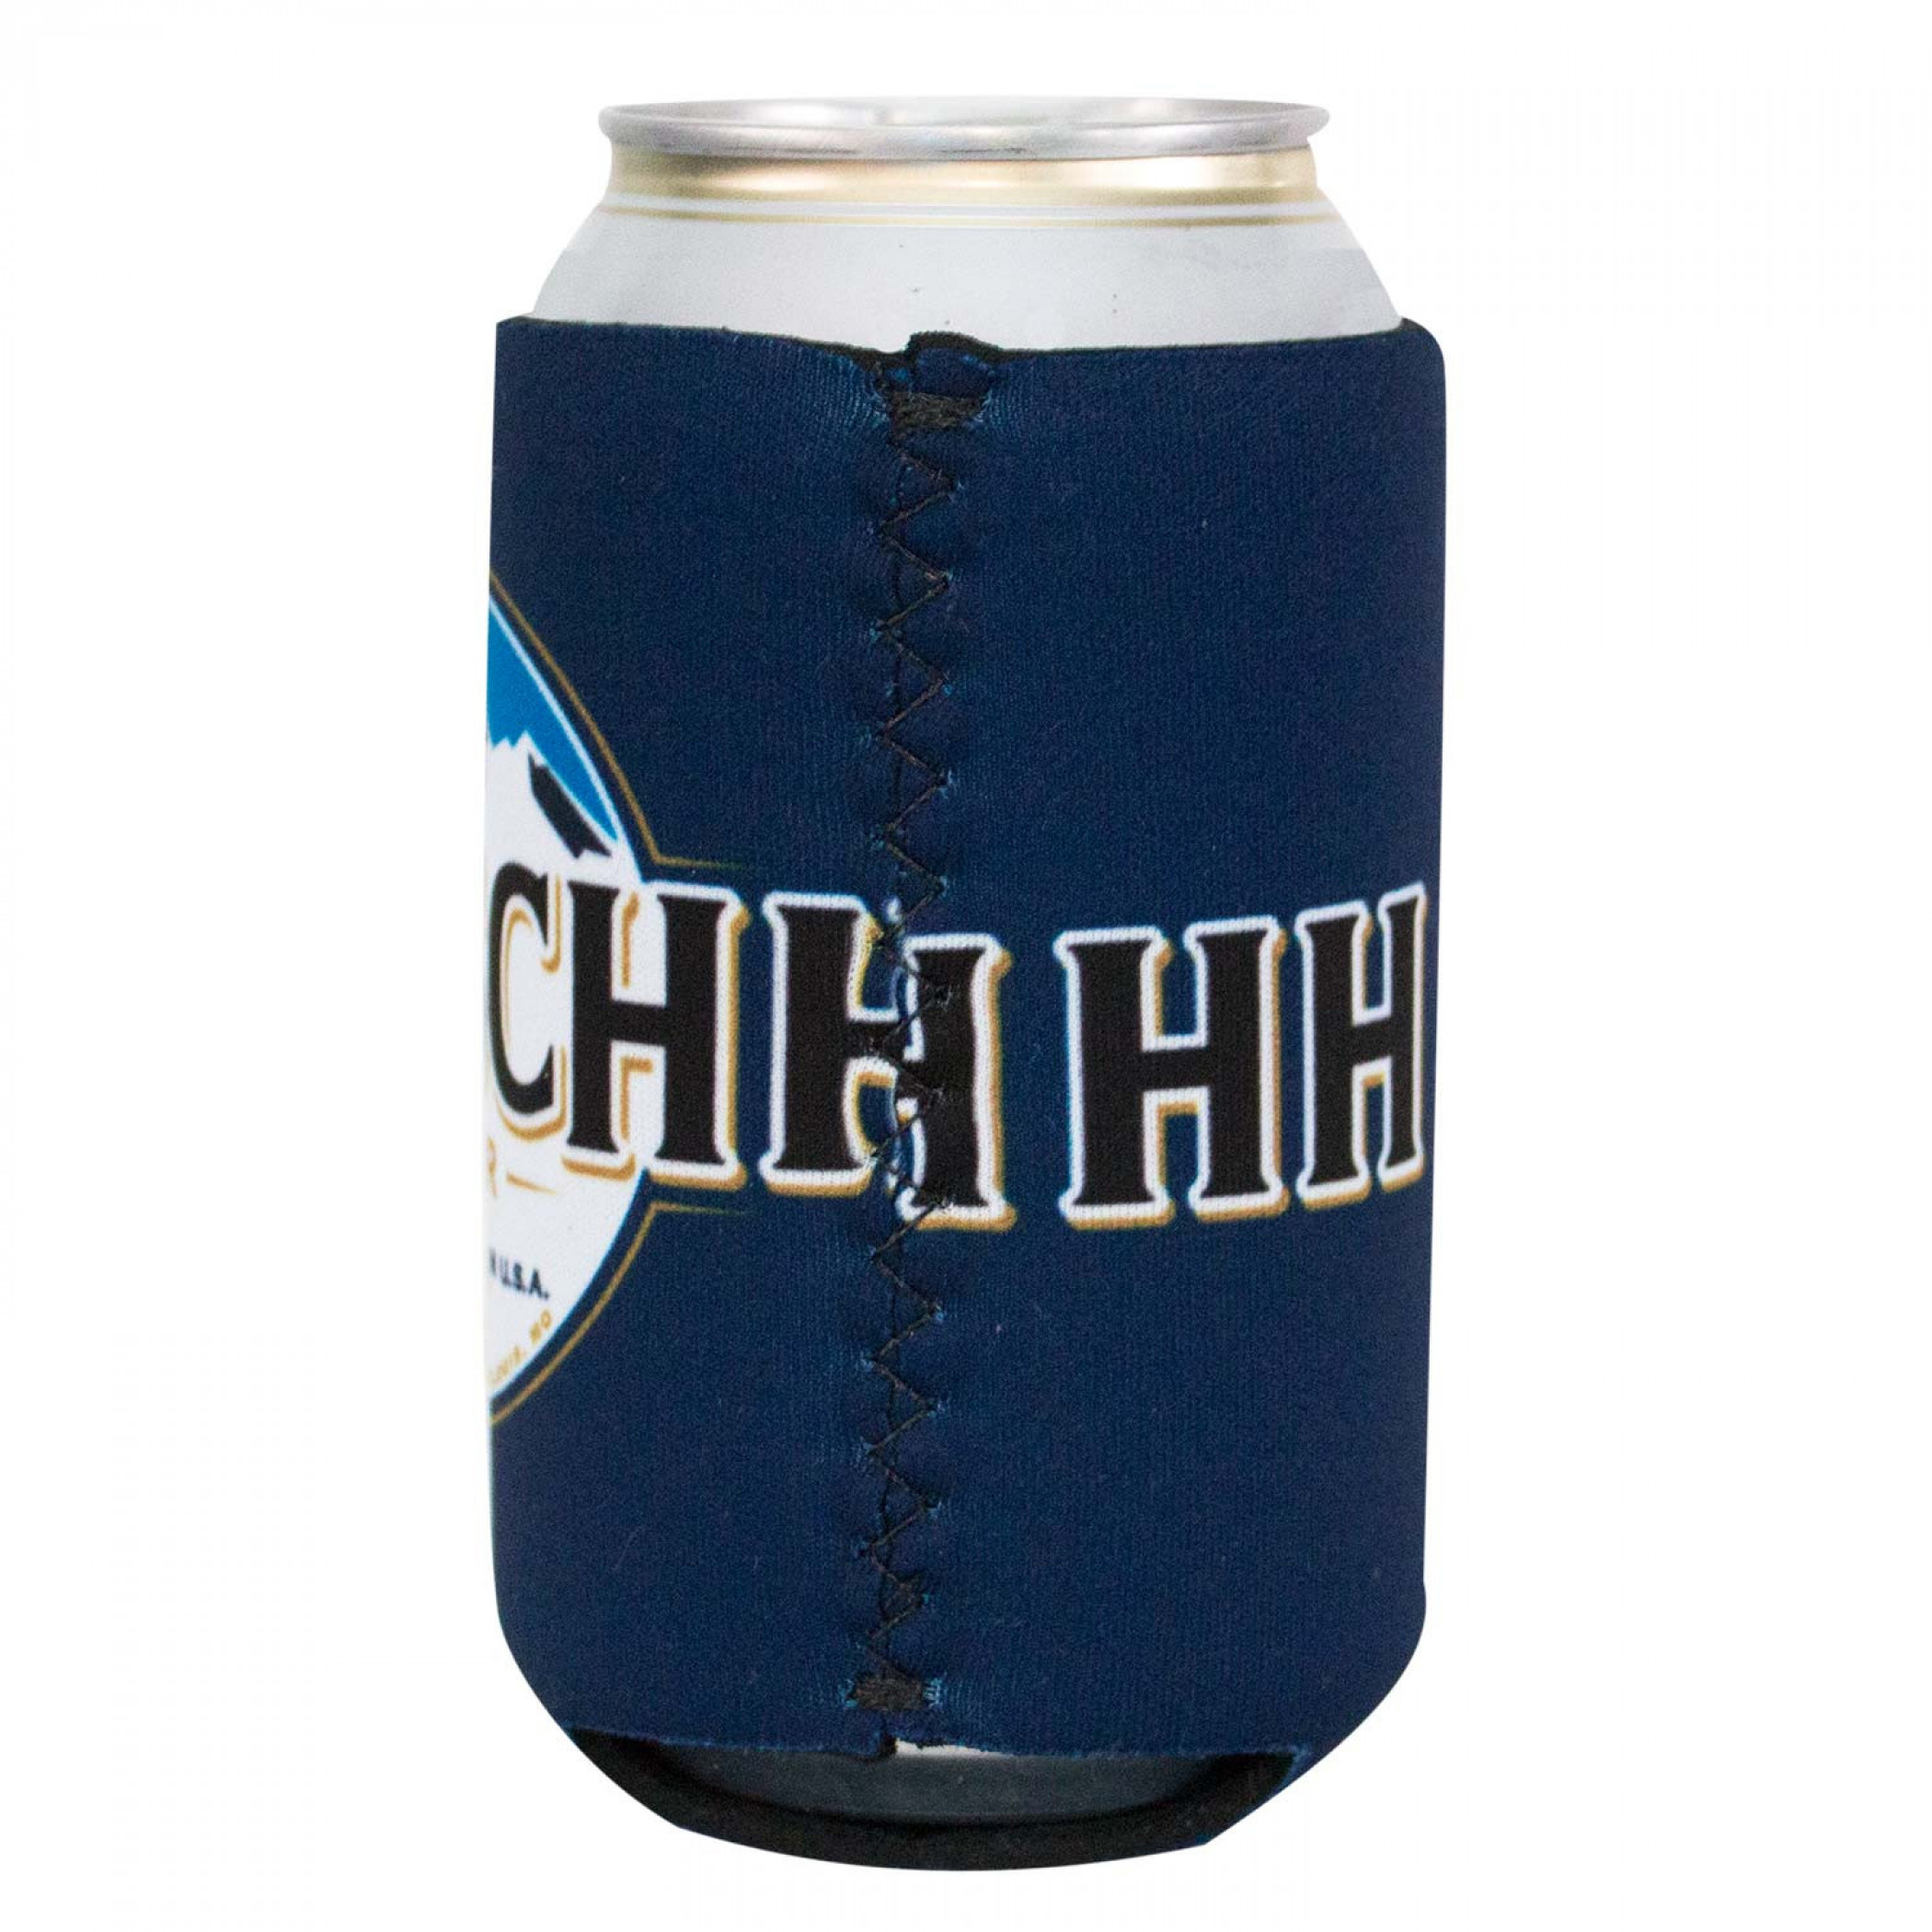 Busch Beer Navy Blue Buscchhhhh Can Insulator